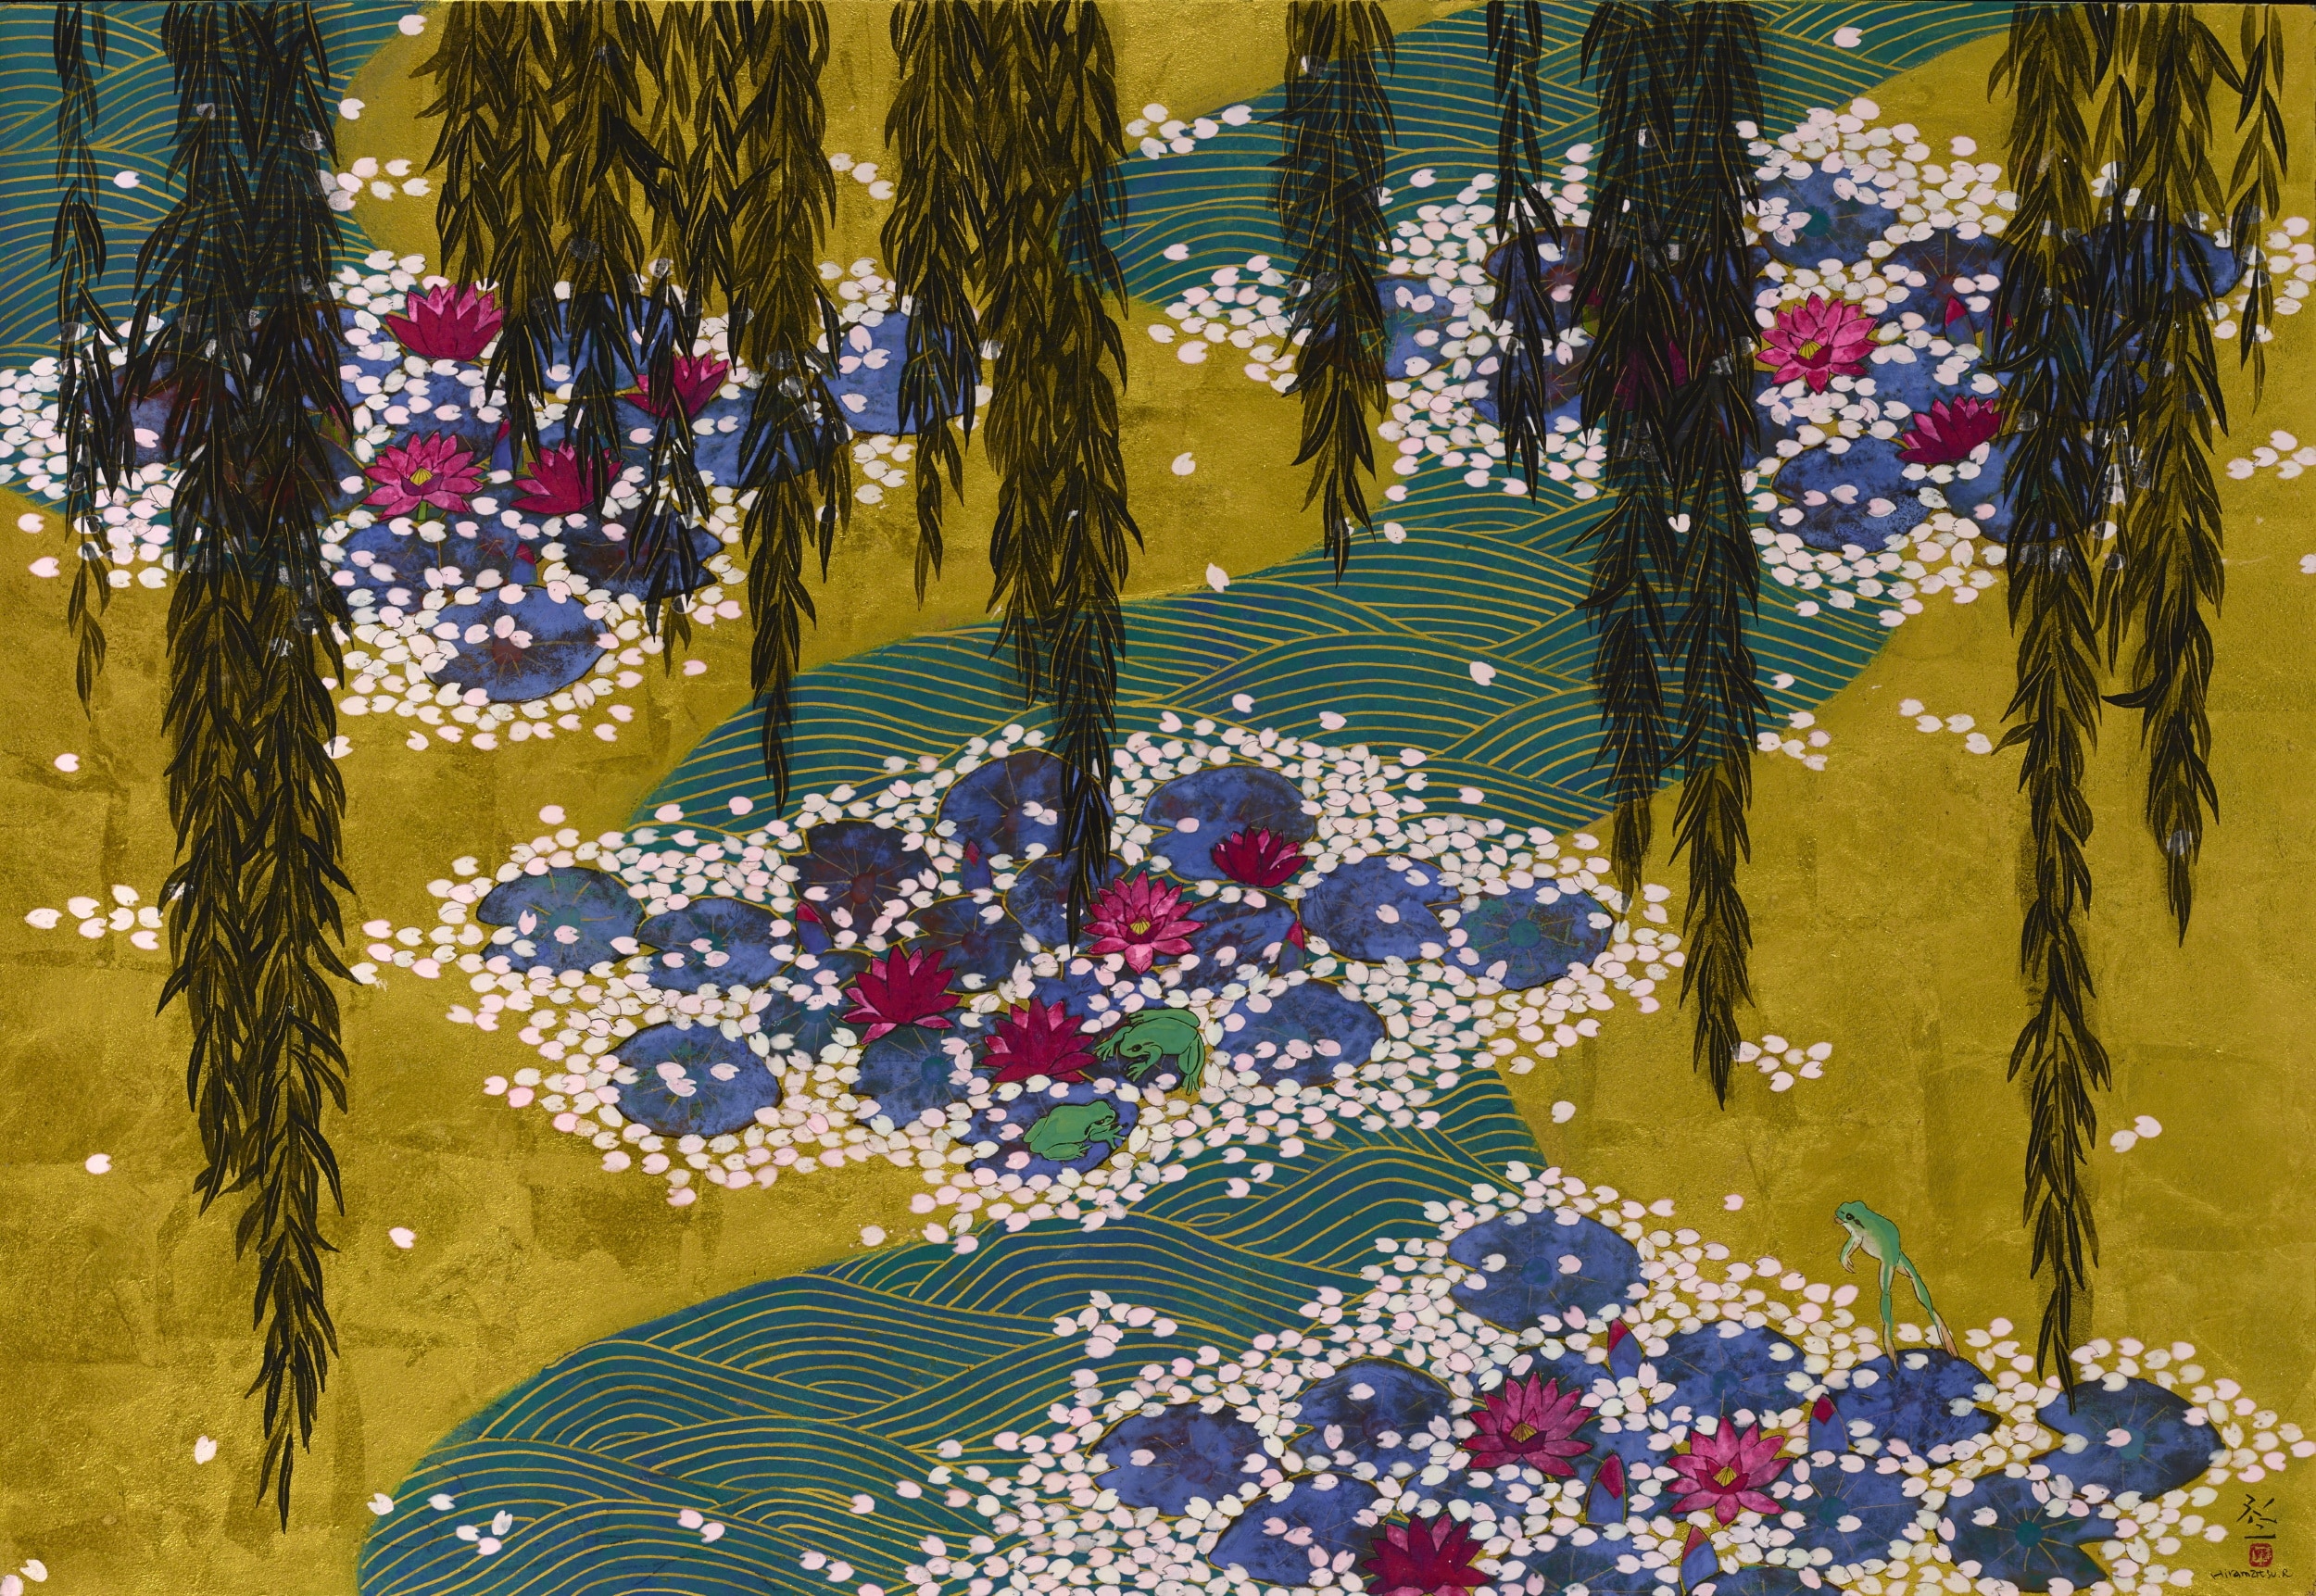 Hiramatsu Reiji, Reflets de nuages dorés sur l’étang